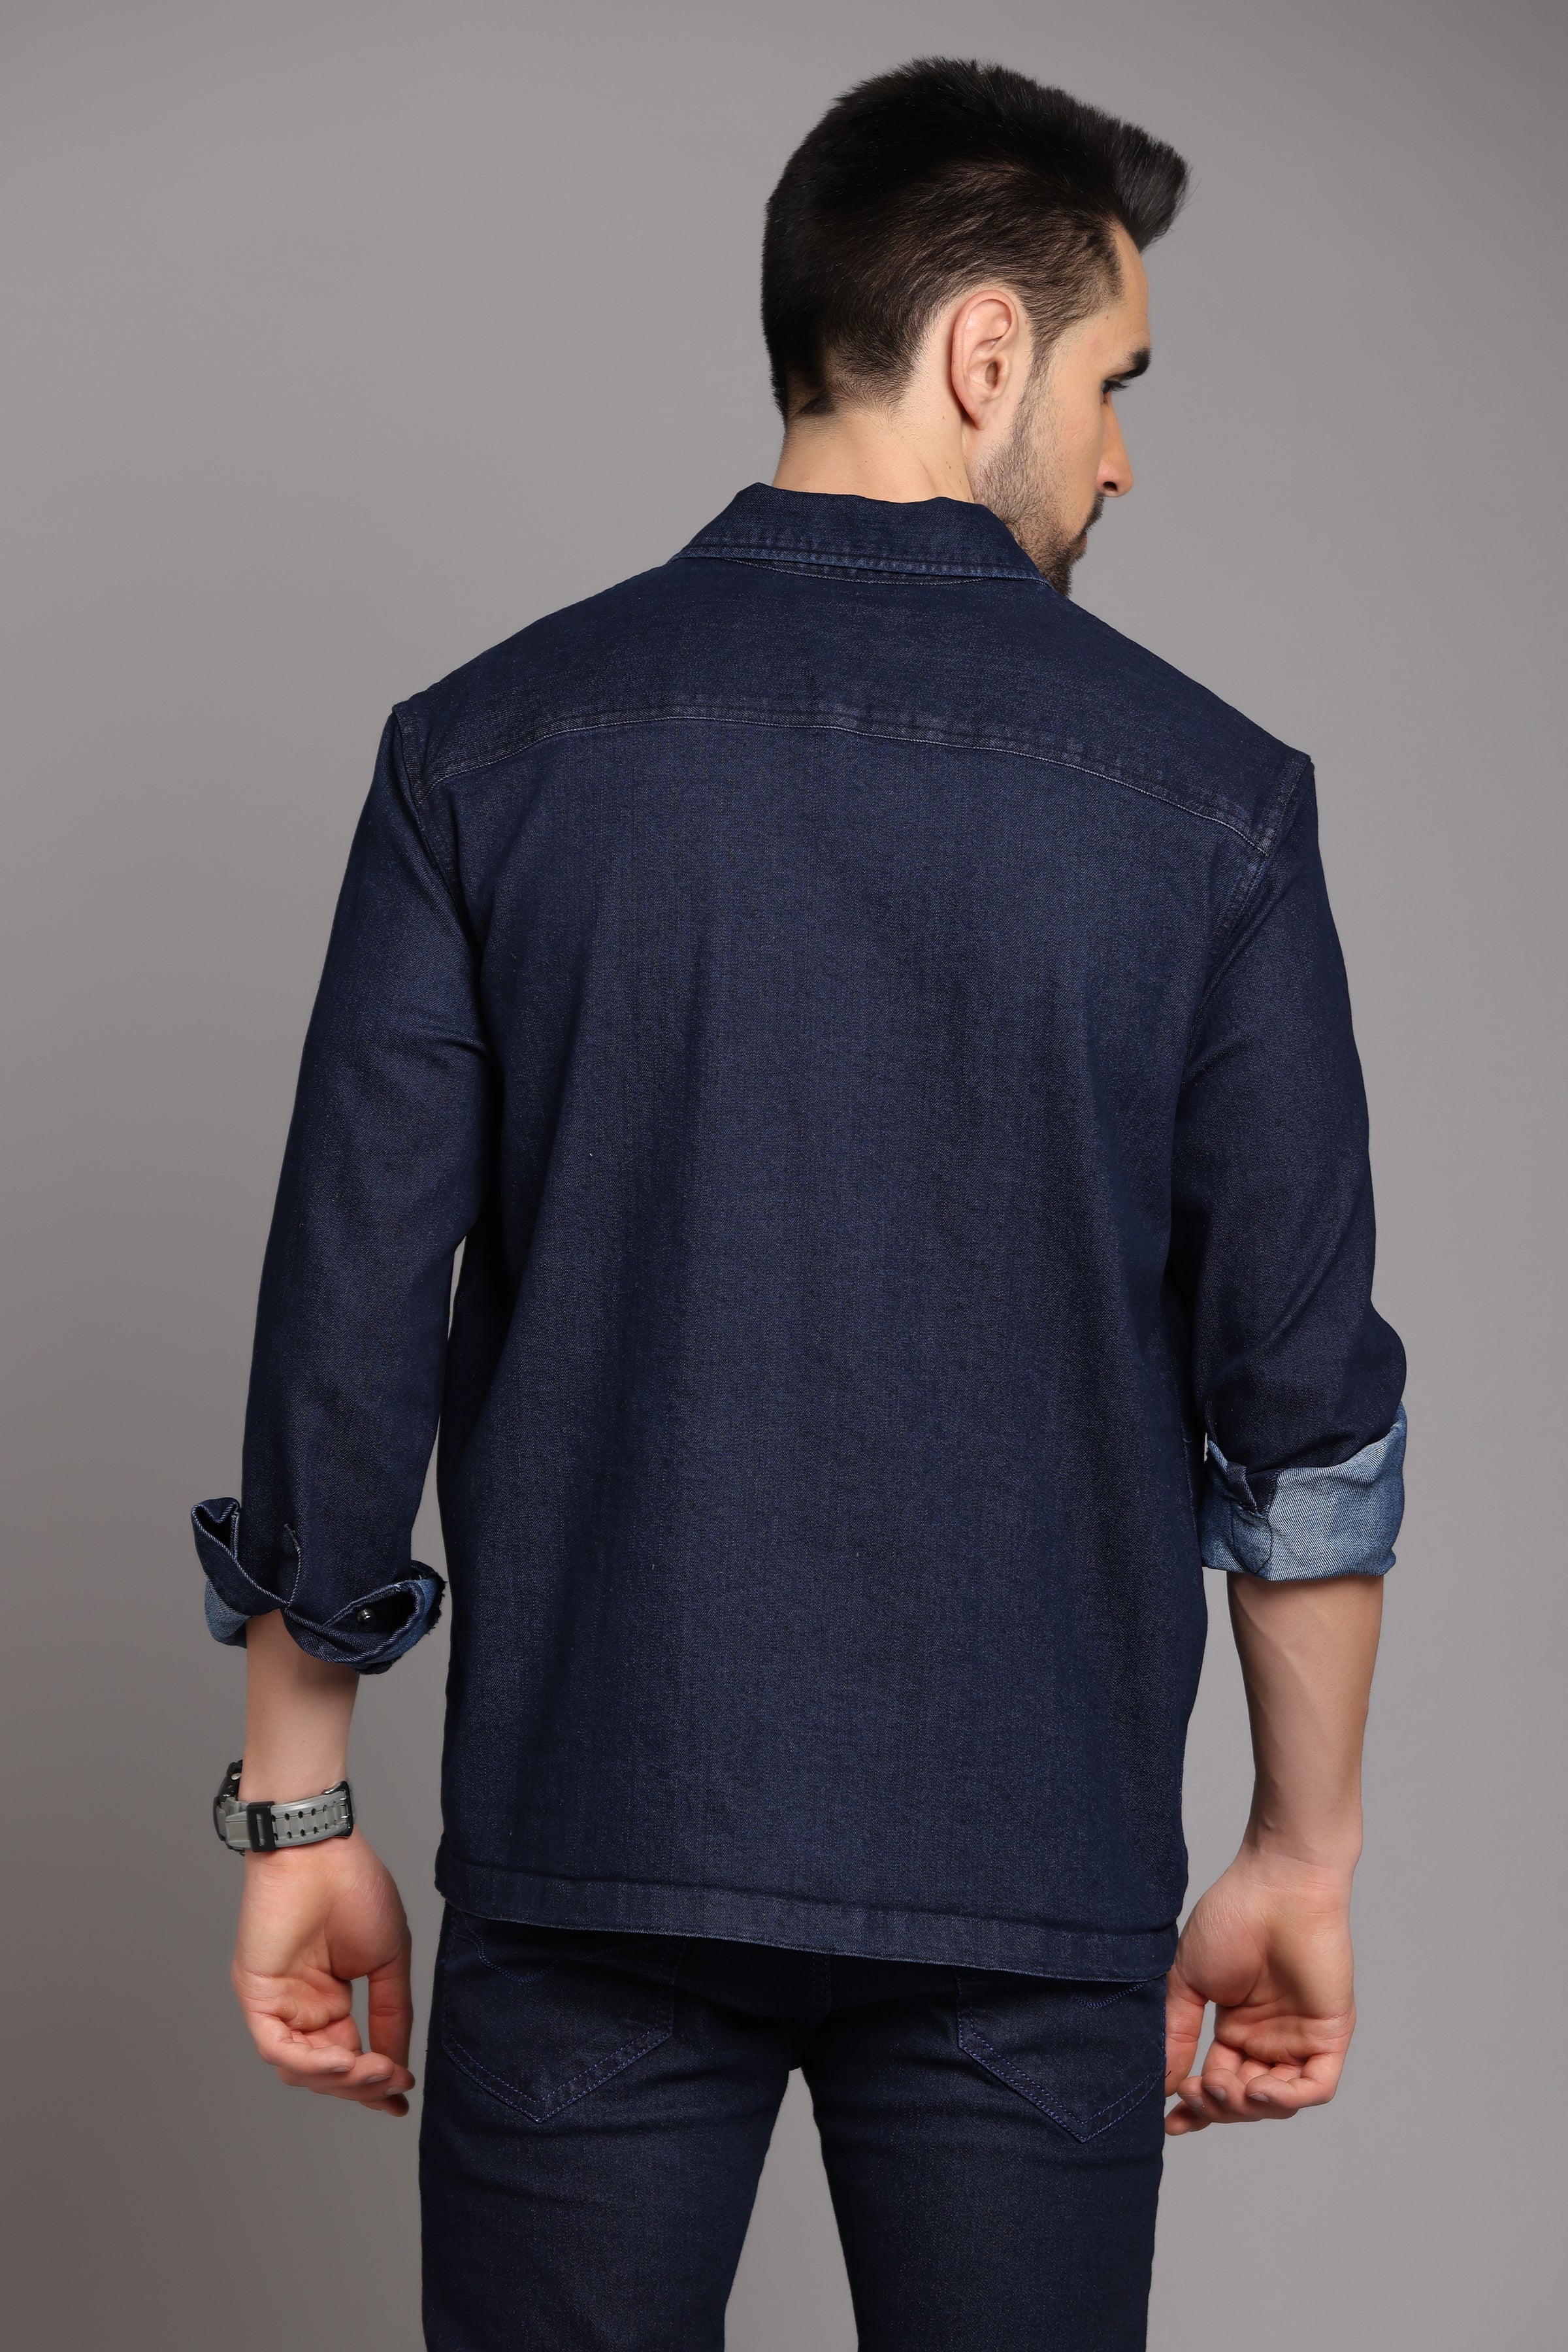 Dark Blue Denim Zipper Jacket with Double Pockets Shirts Project 30 